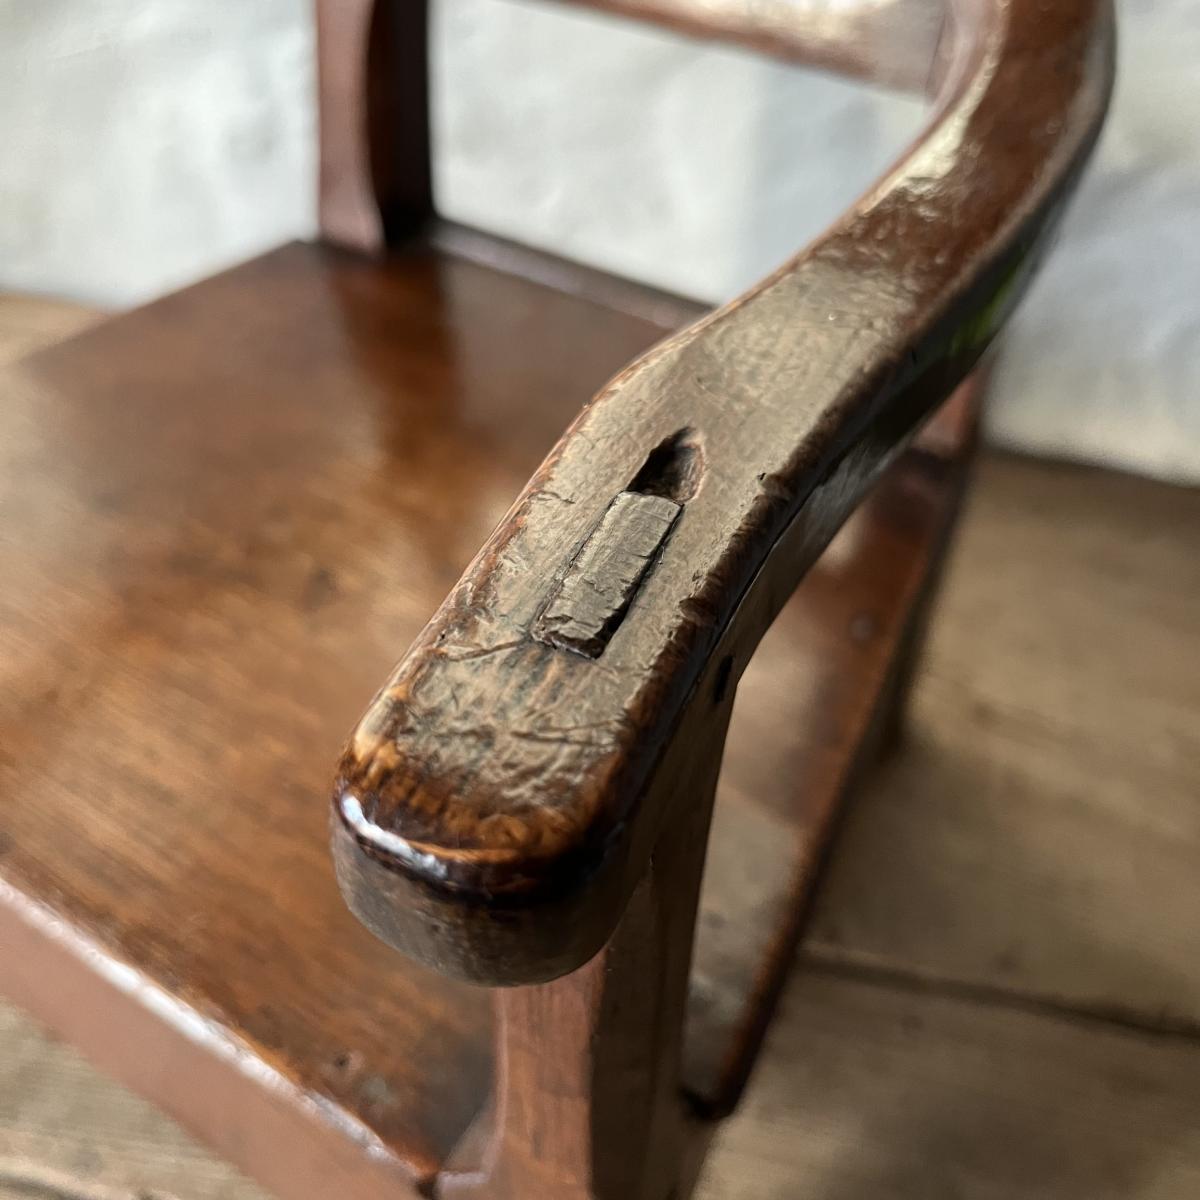 Welsh oak child’s chair